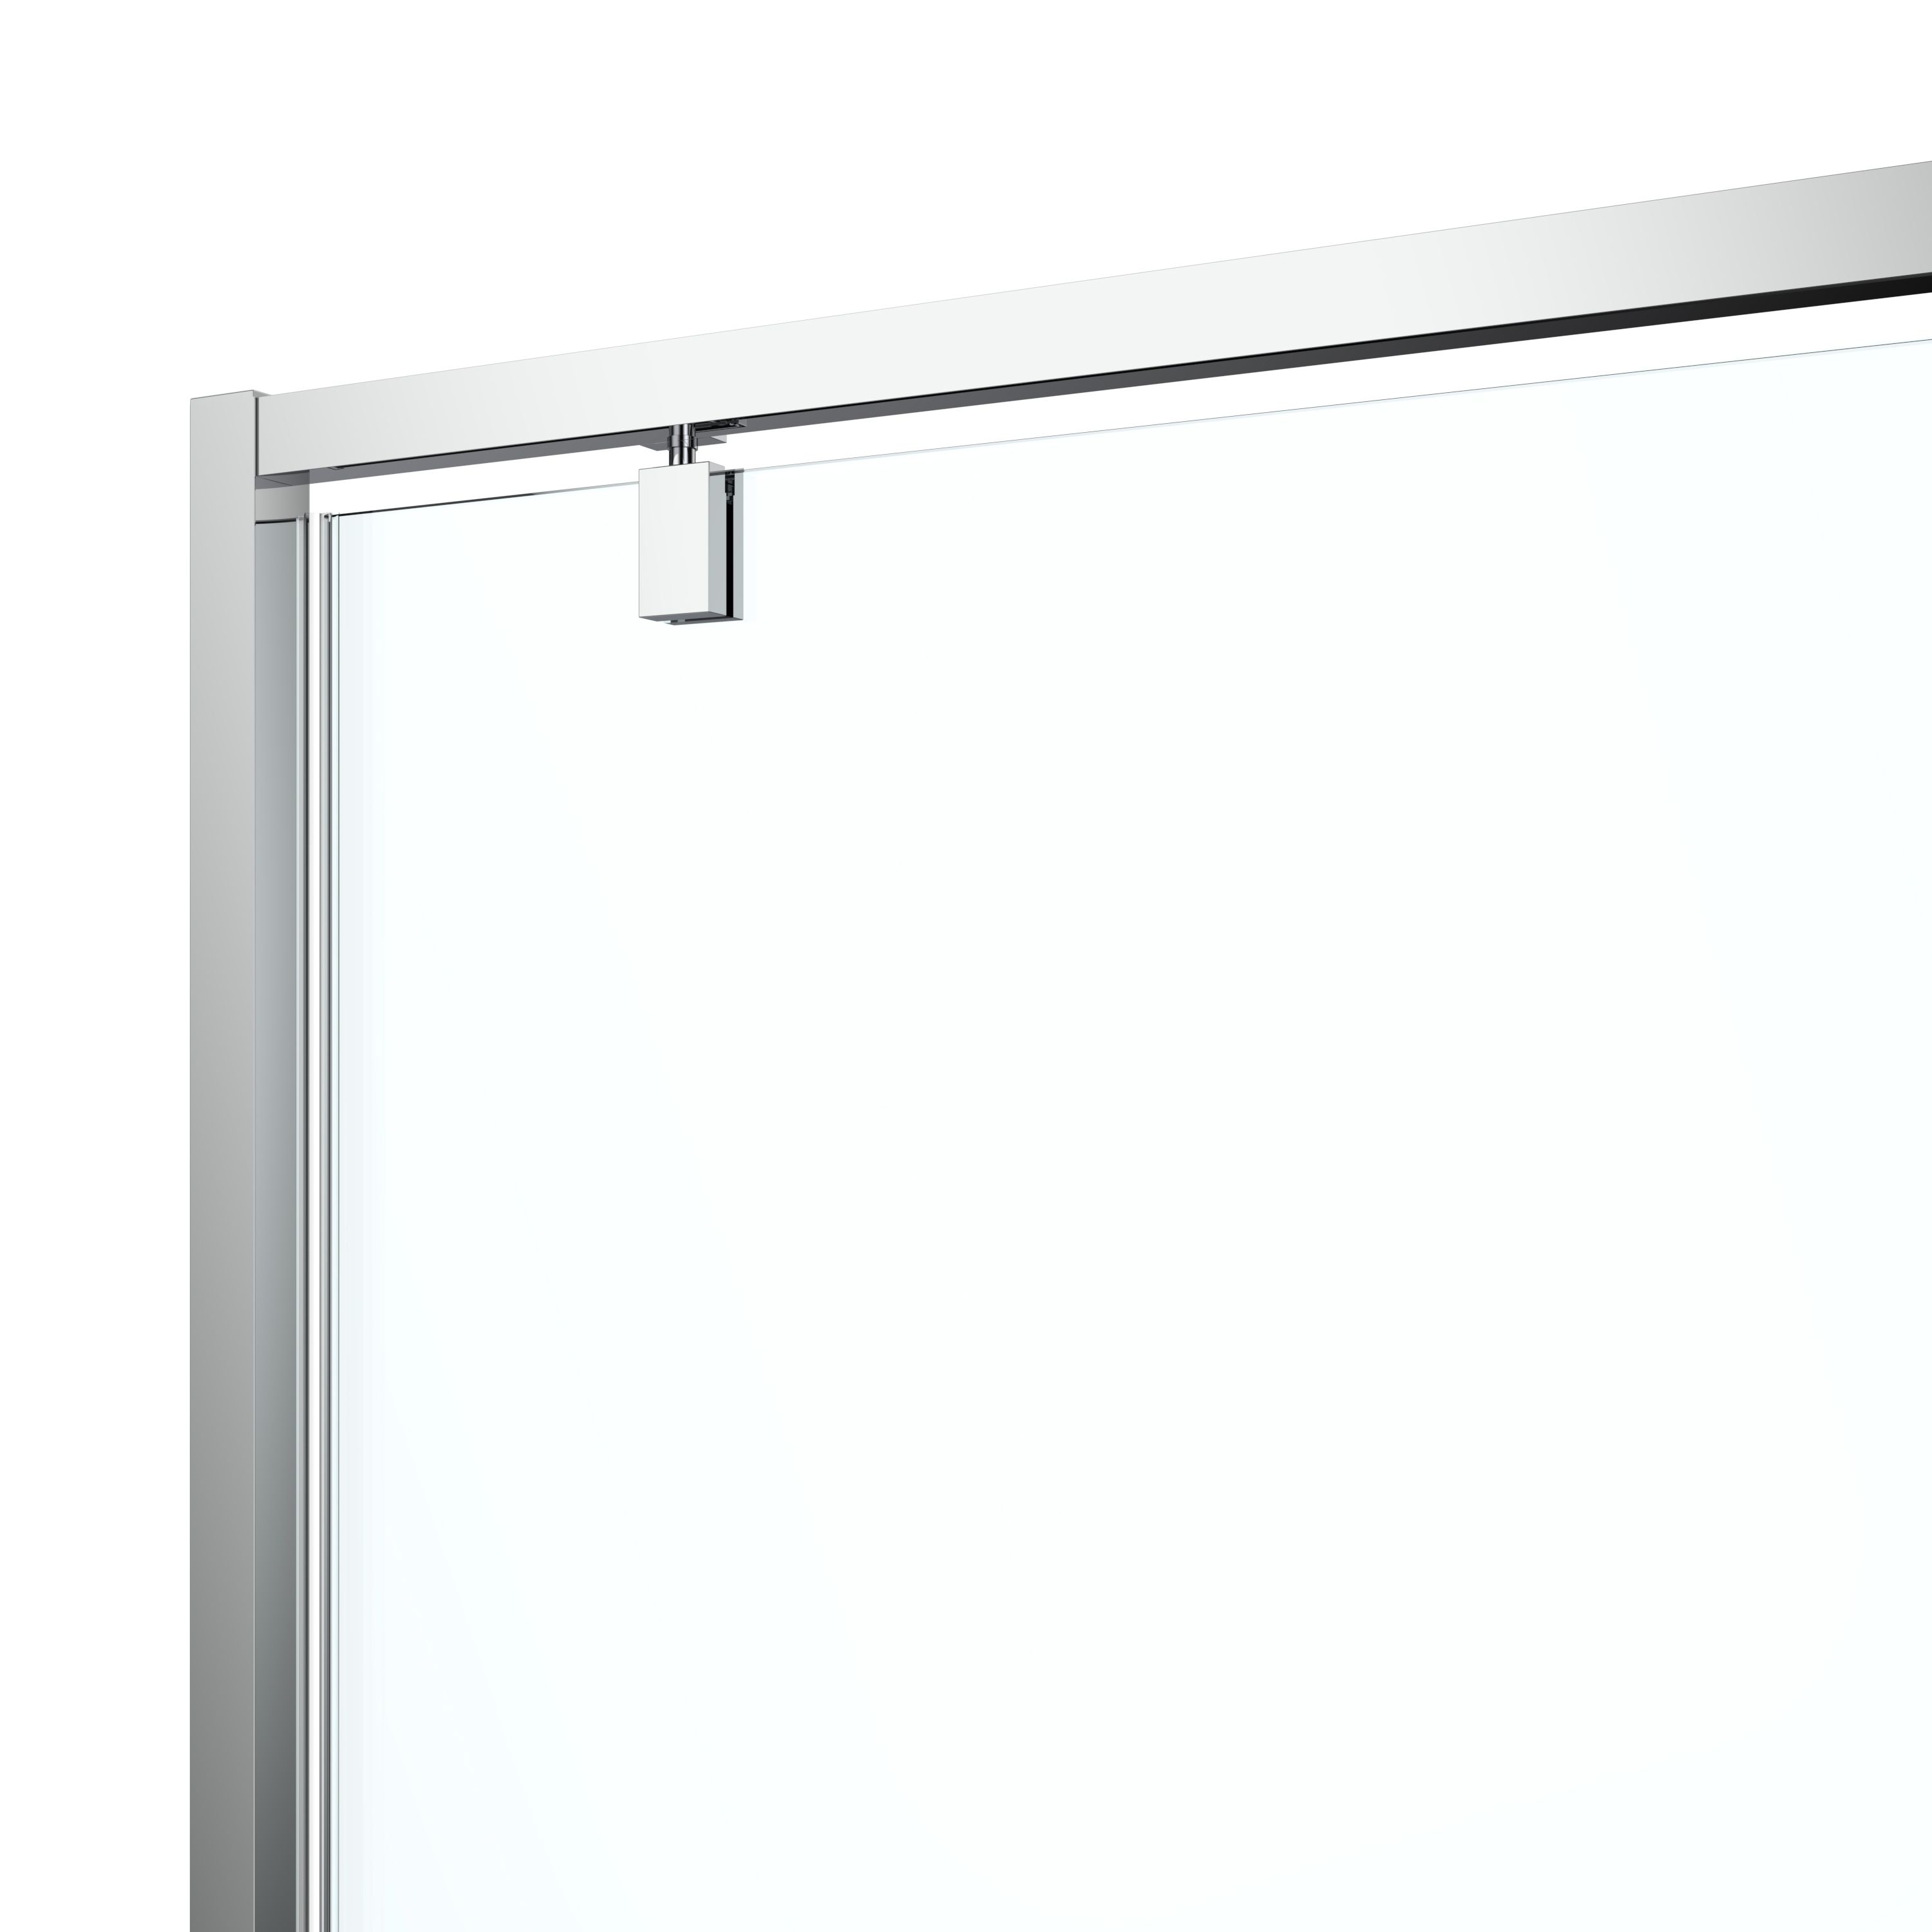 GoodHome Ledava Minimal frame Chrome effect Clear glass Half open pivot Shower Door (H)195cm (W)120cm